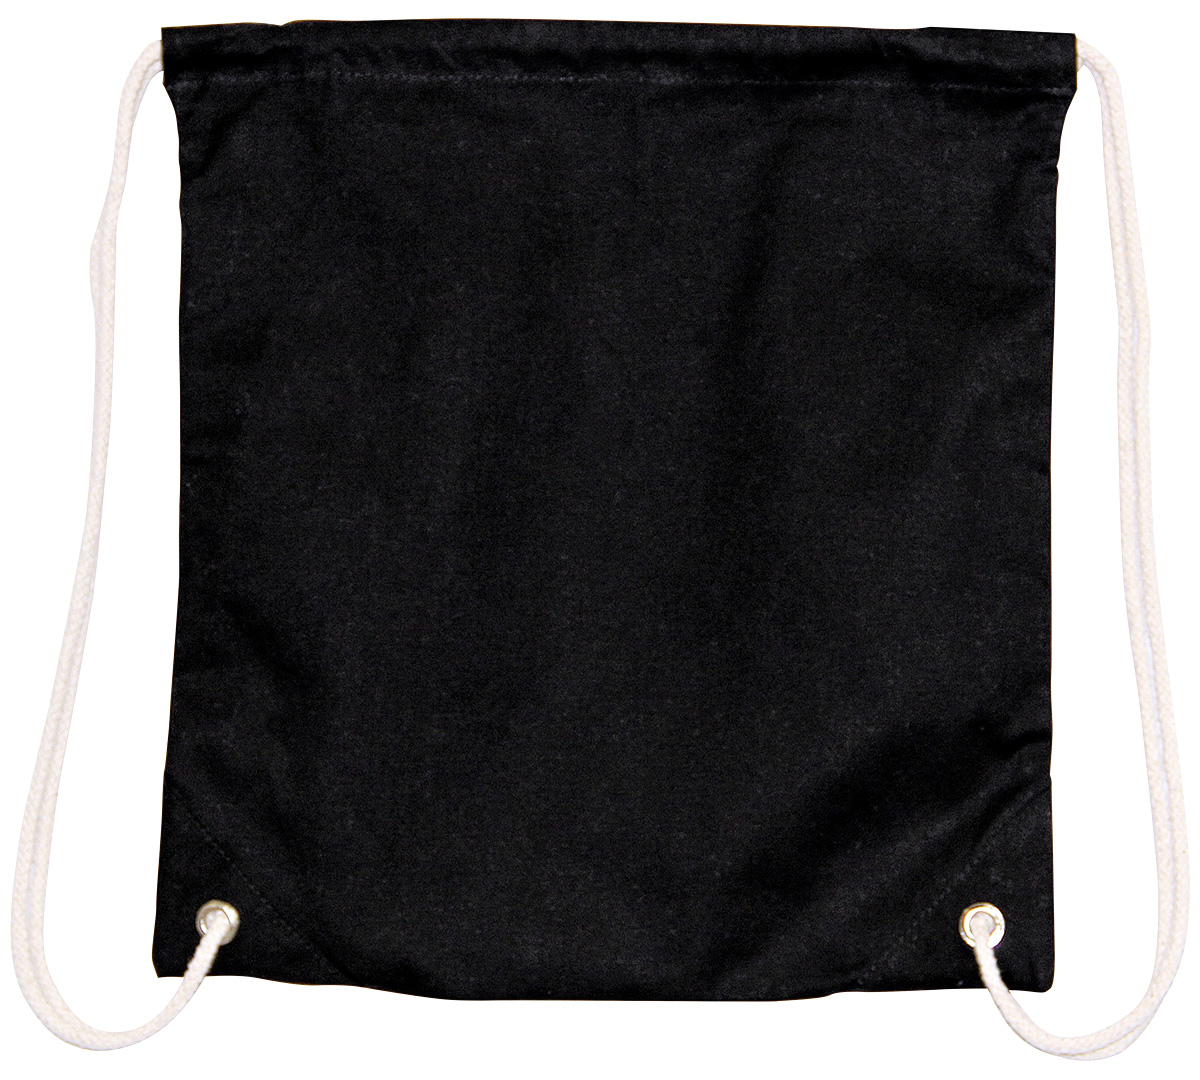 Black Bags Drawstring